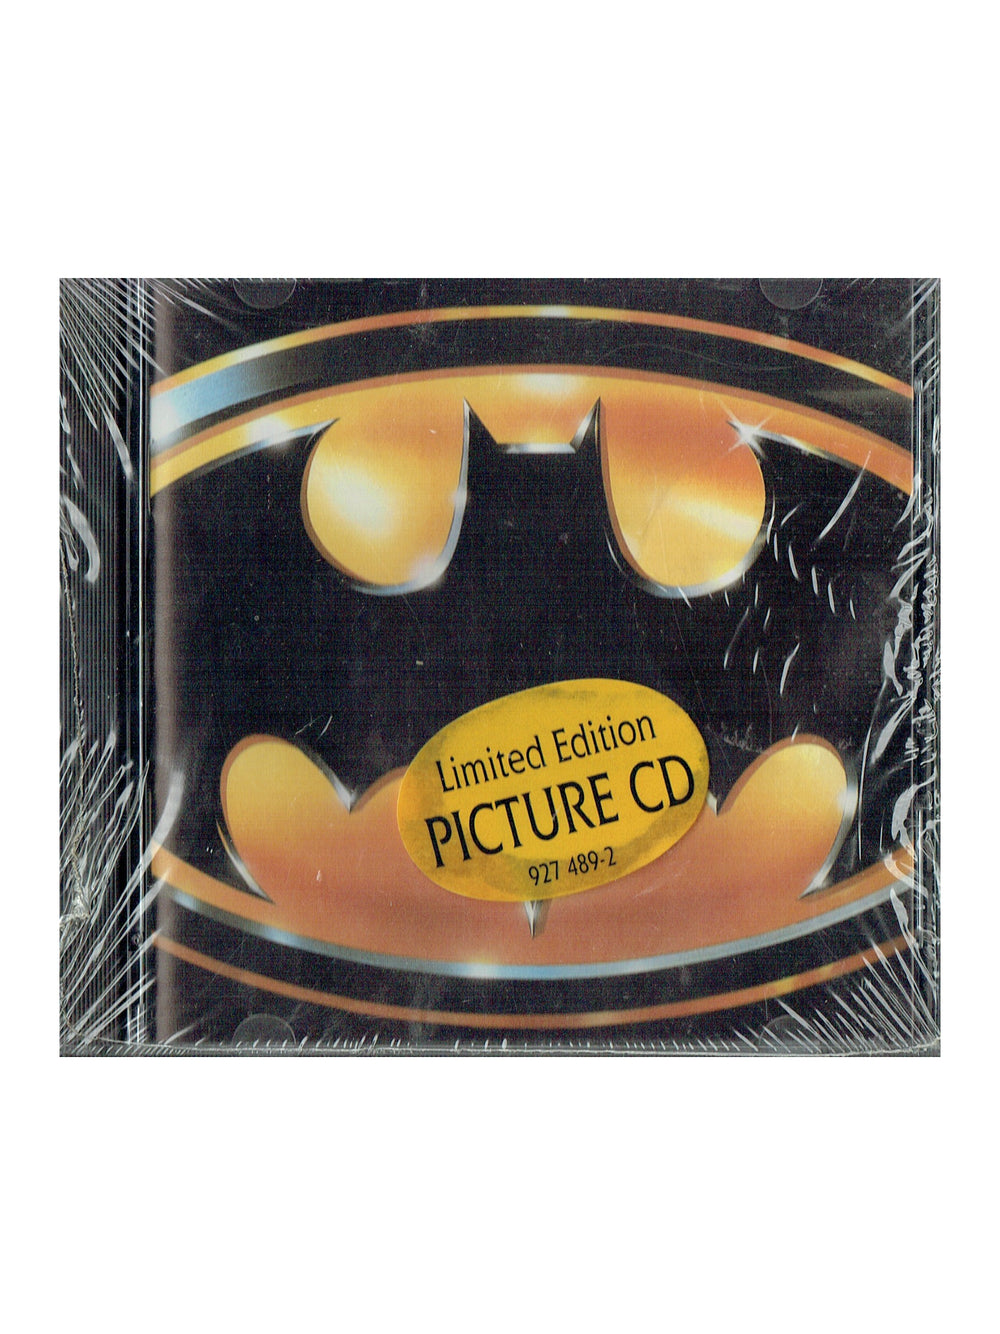 Prince Batman Soundtrack CD Album Picture Disc Release SEALED SMS